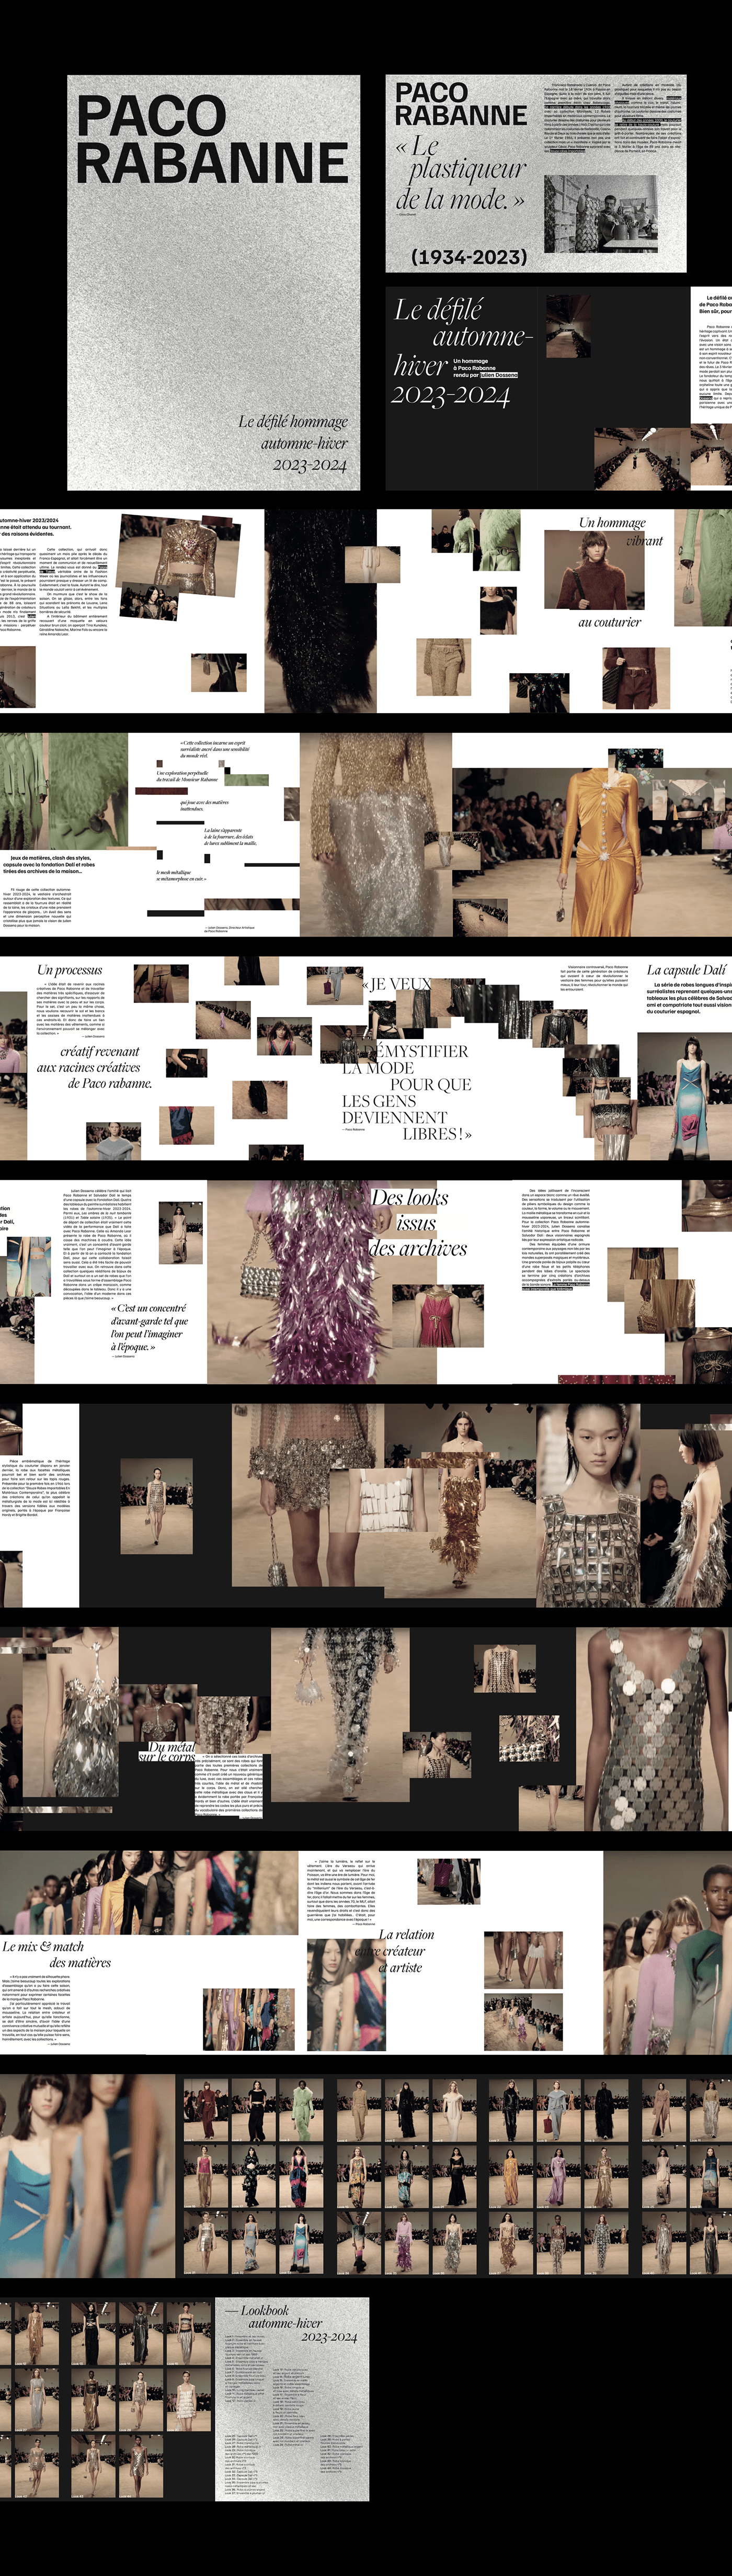 Paco Rabanne Fashion  runway Show fashionshow edition collector luxury